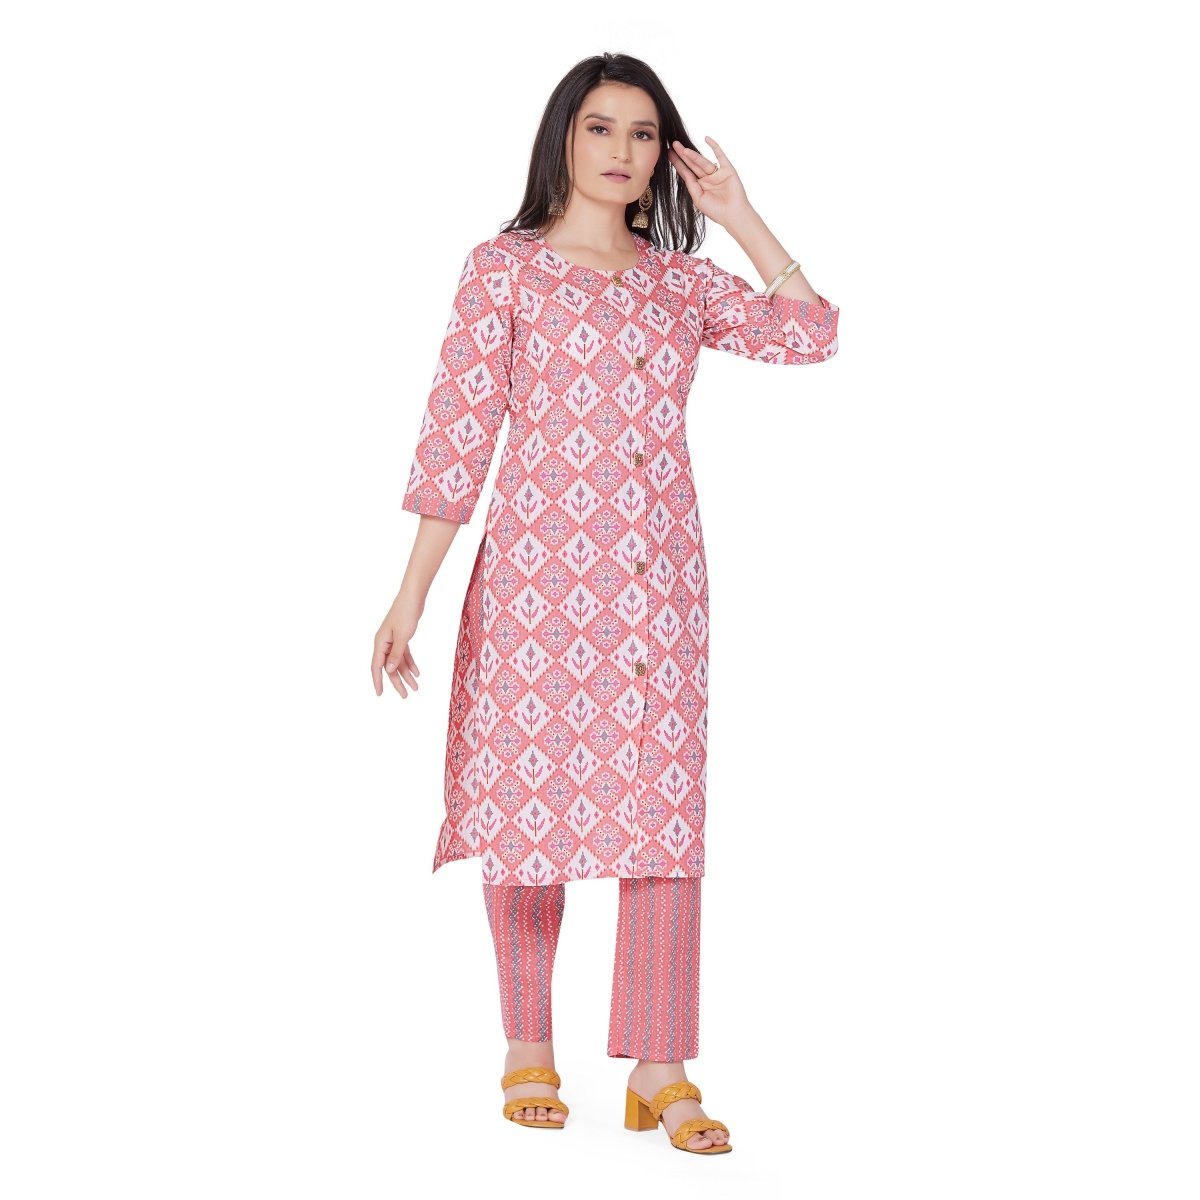 Printed Jaipuri Cotton Kurta Suit - Stunics